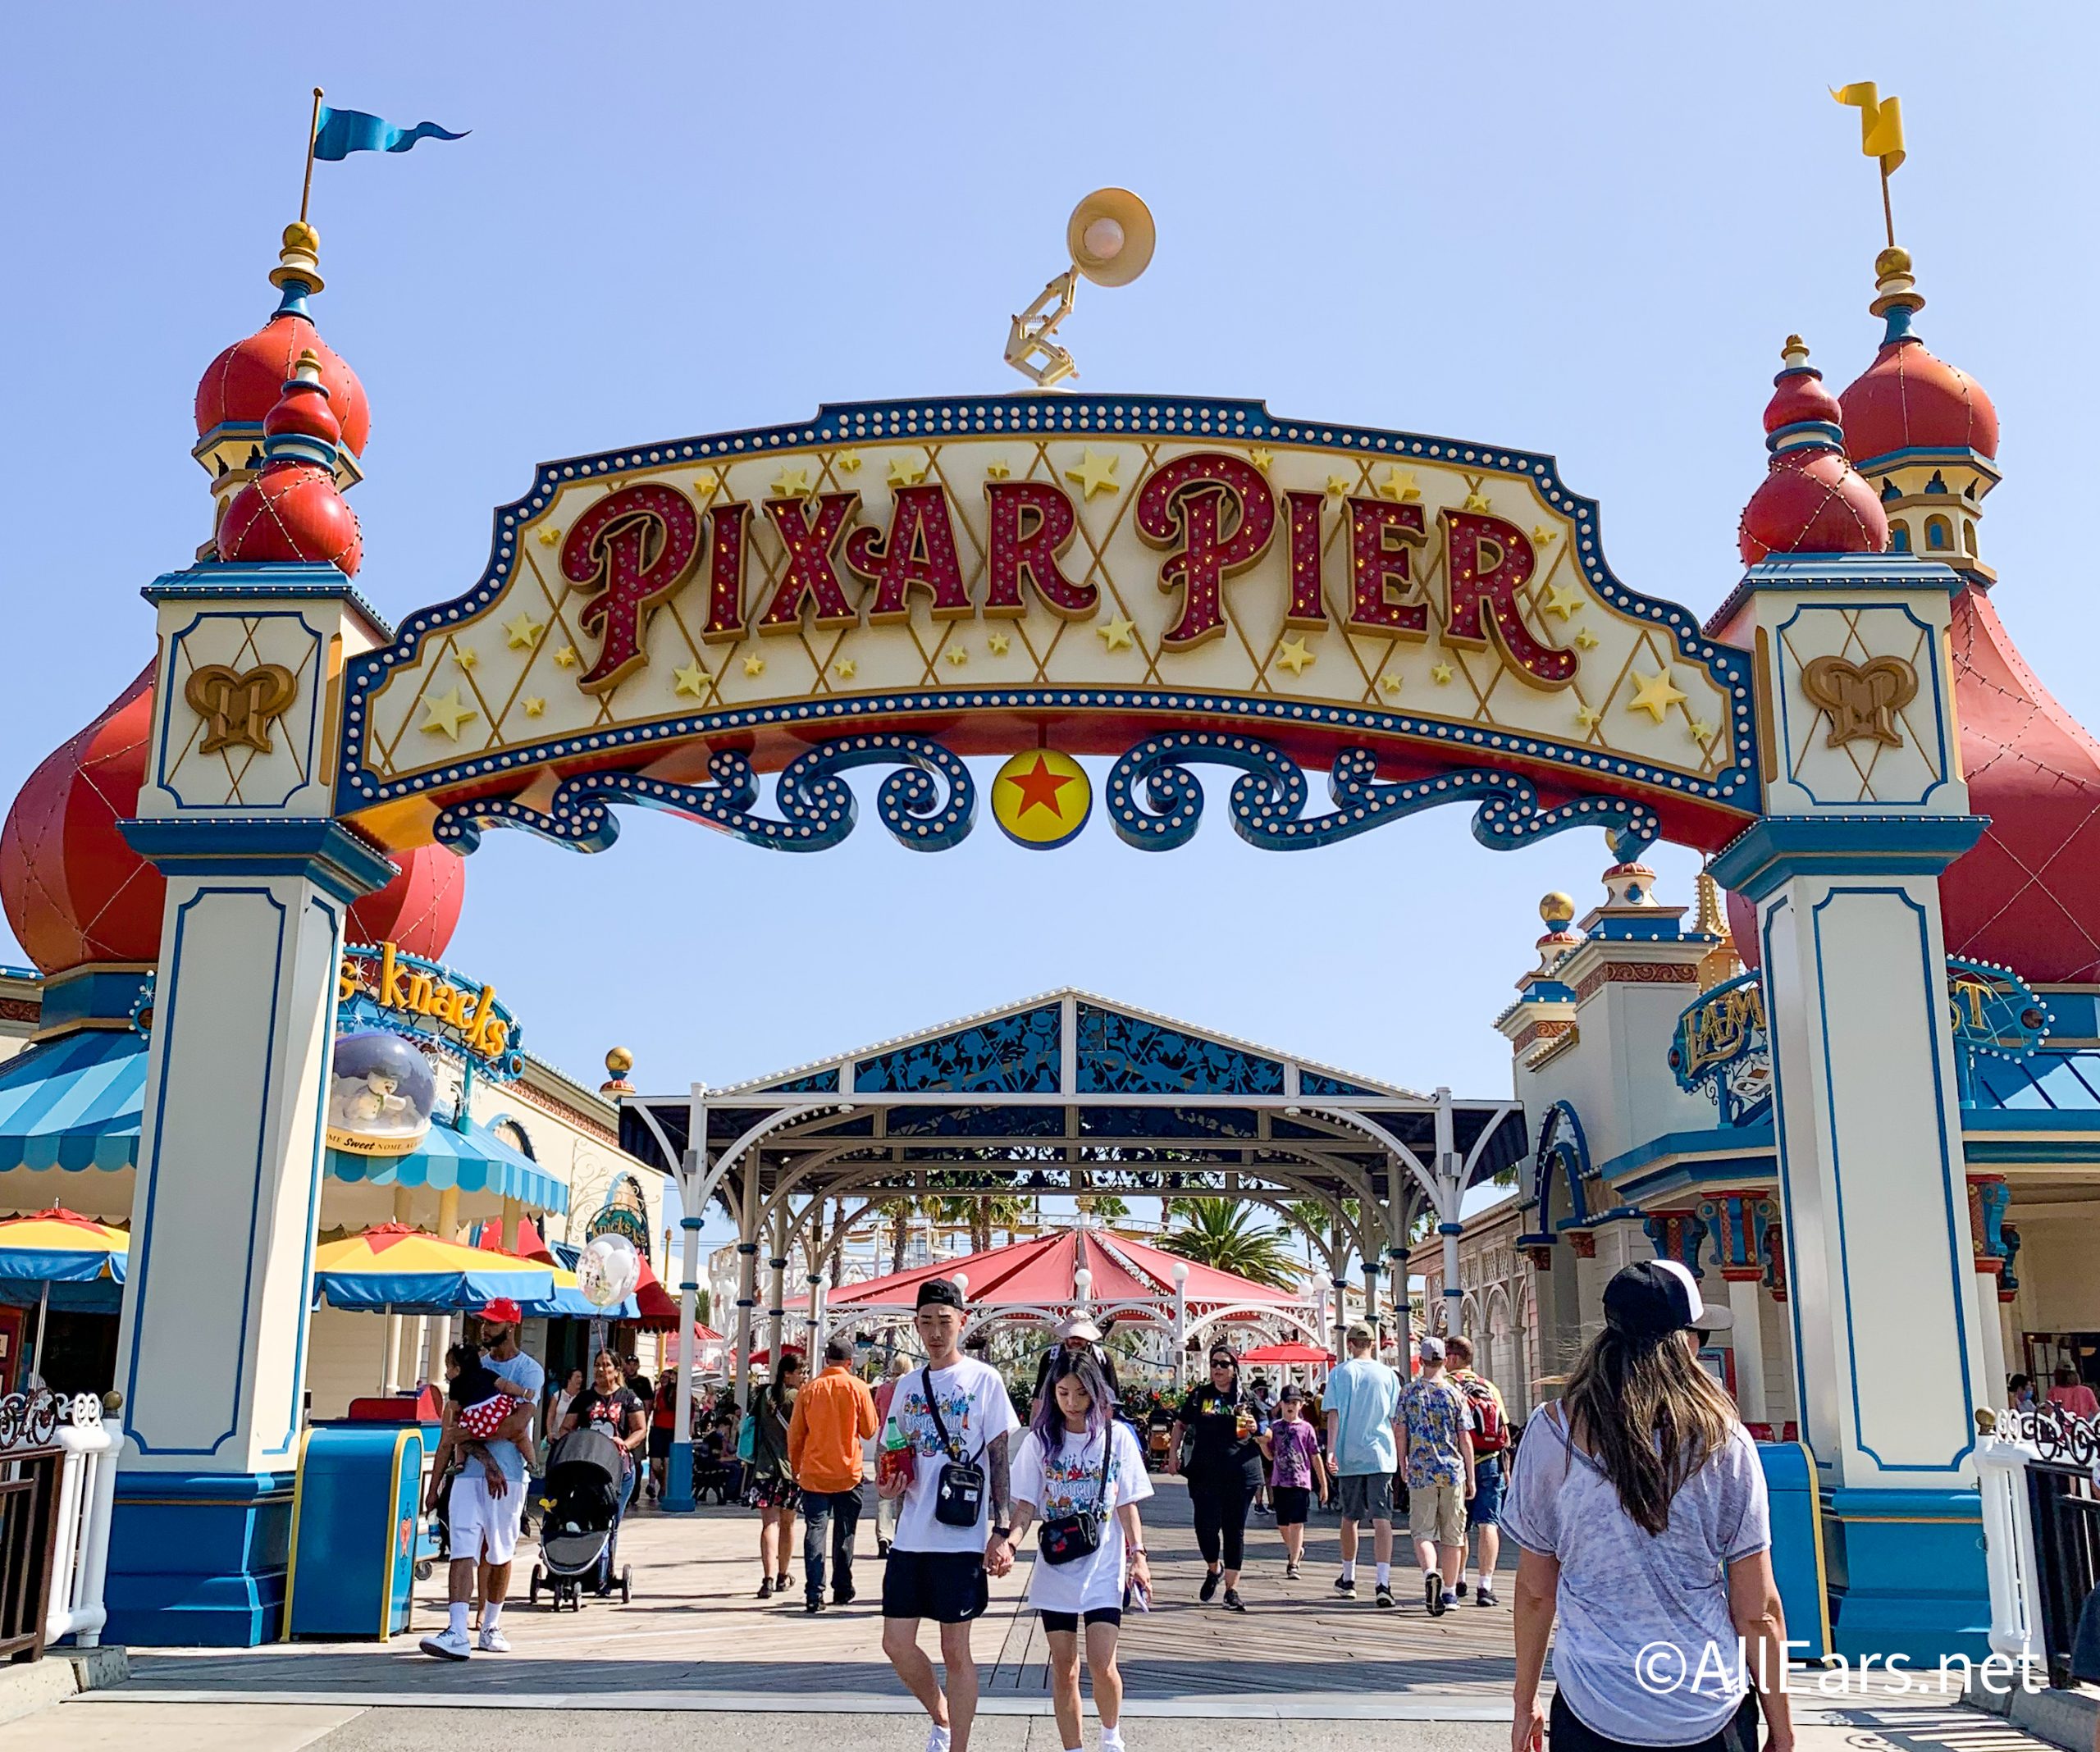 2021 Dlr California Adventure Pixar Pier 2 Allearsnet